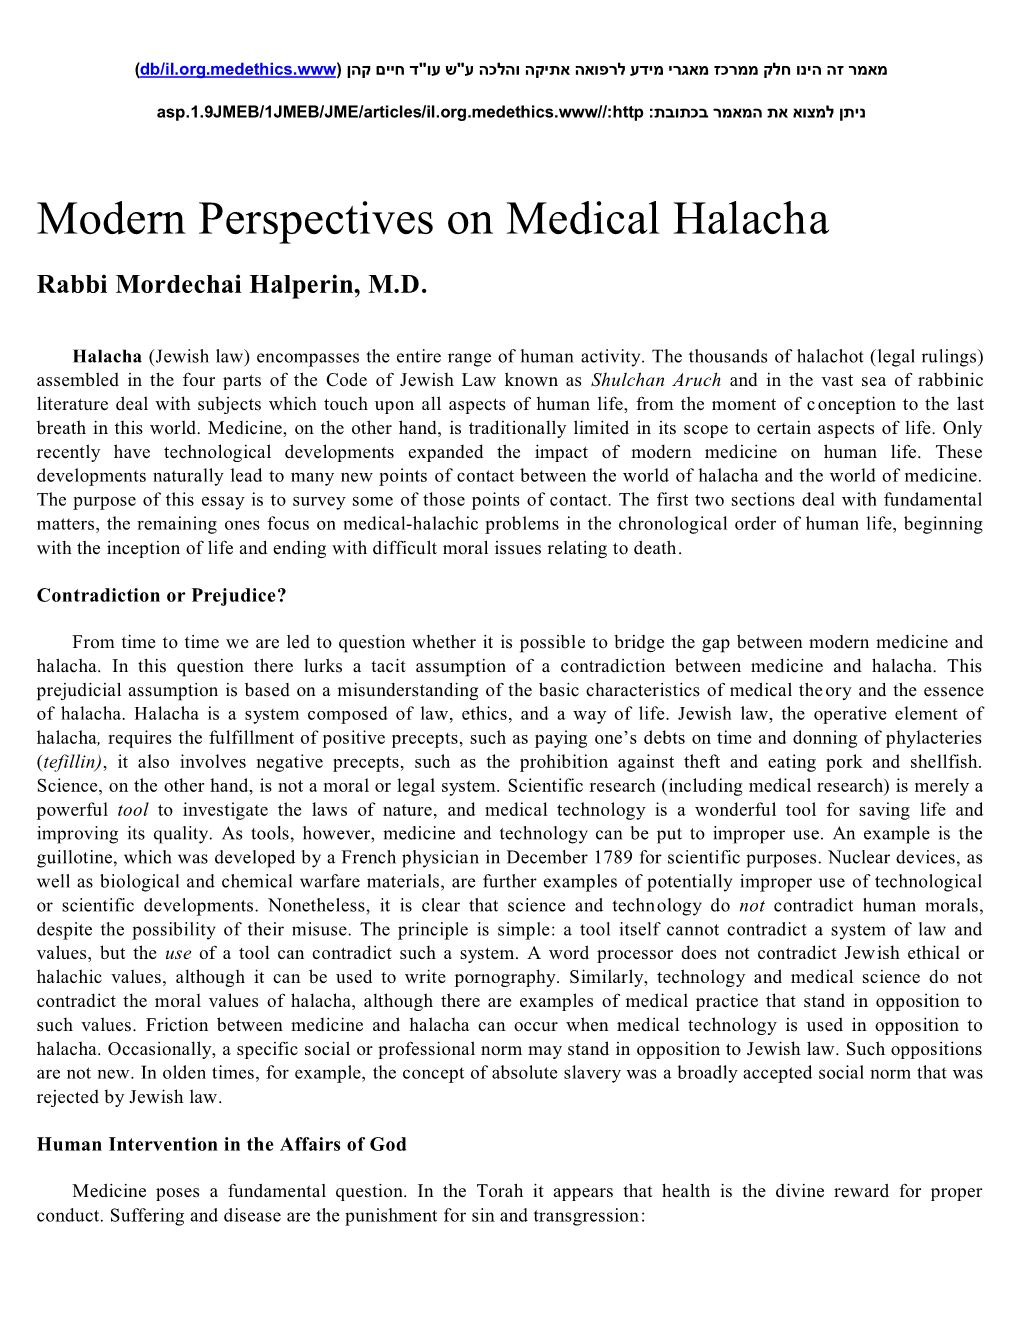 Modern Perspectives on Medical Halacha